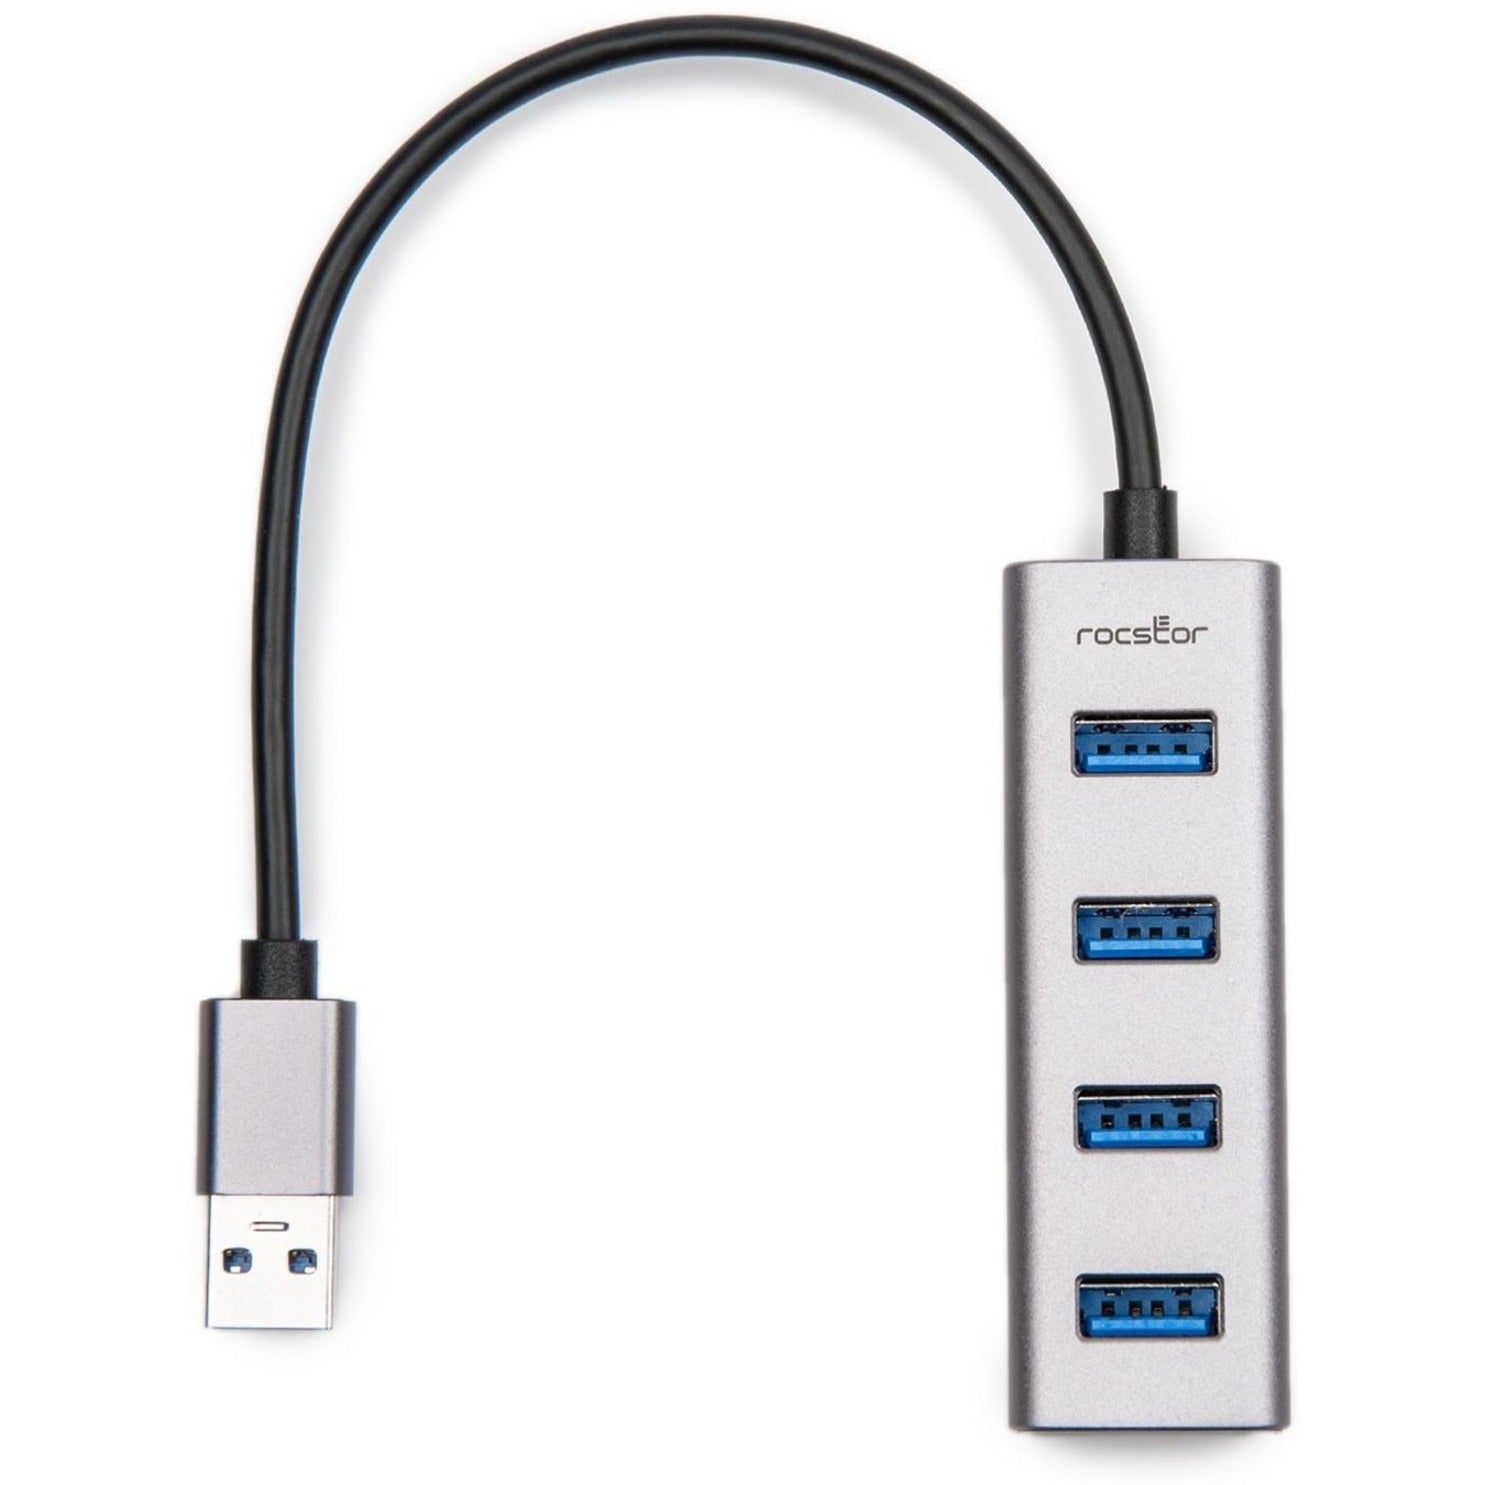 Rocstor Y10A270-A1 Portable 4 Port Hub USB-A to 4x USB-A SuperSpeed USB 3.0, 2 Year Warranty, Mac PC Compatible